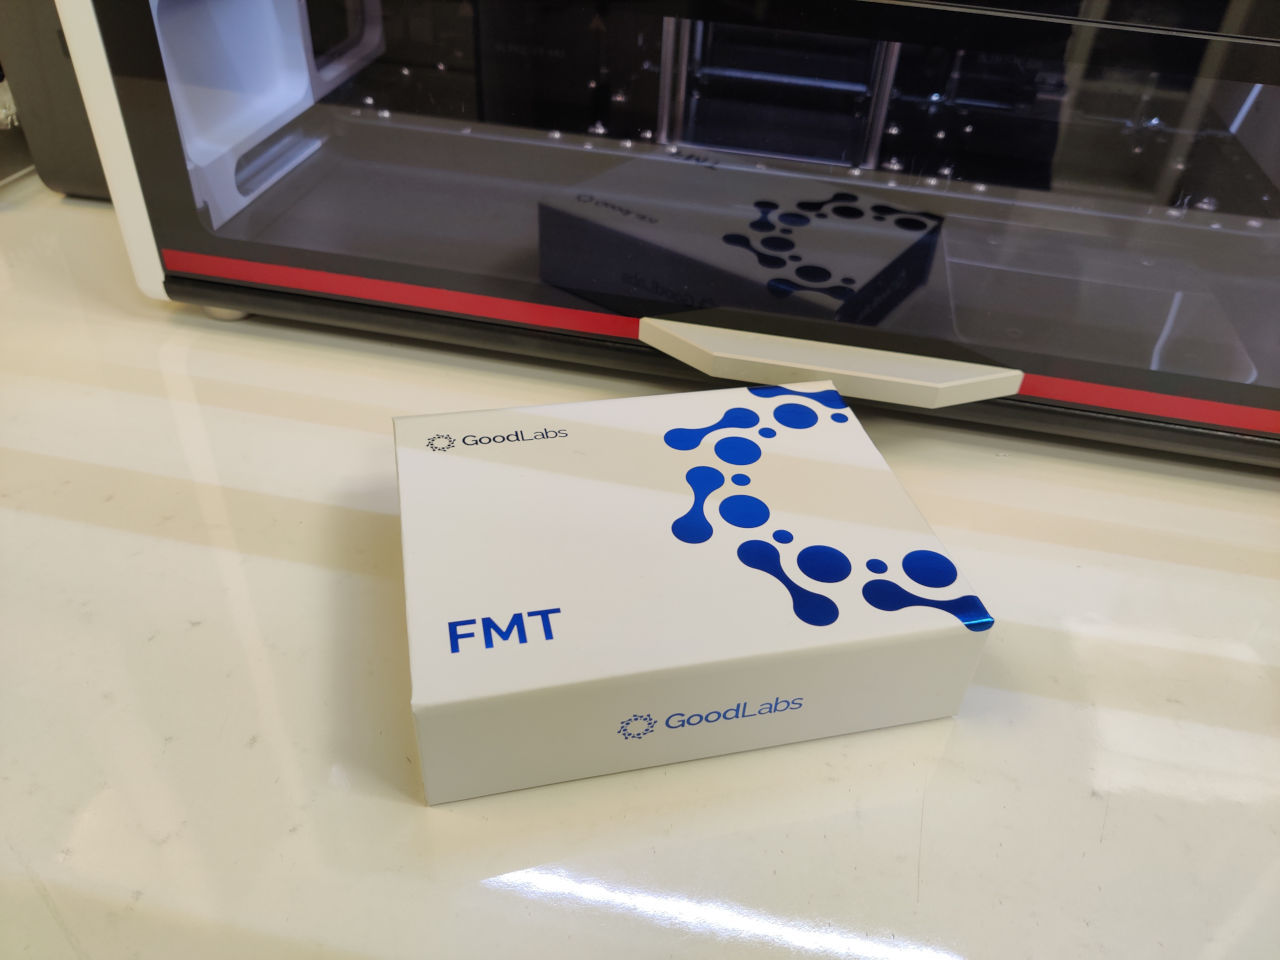 FMT - Stuhltransplantation, fäkale mikrobielle Transplatierung von GoodLabs